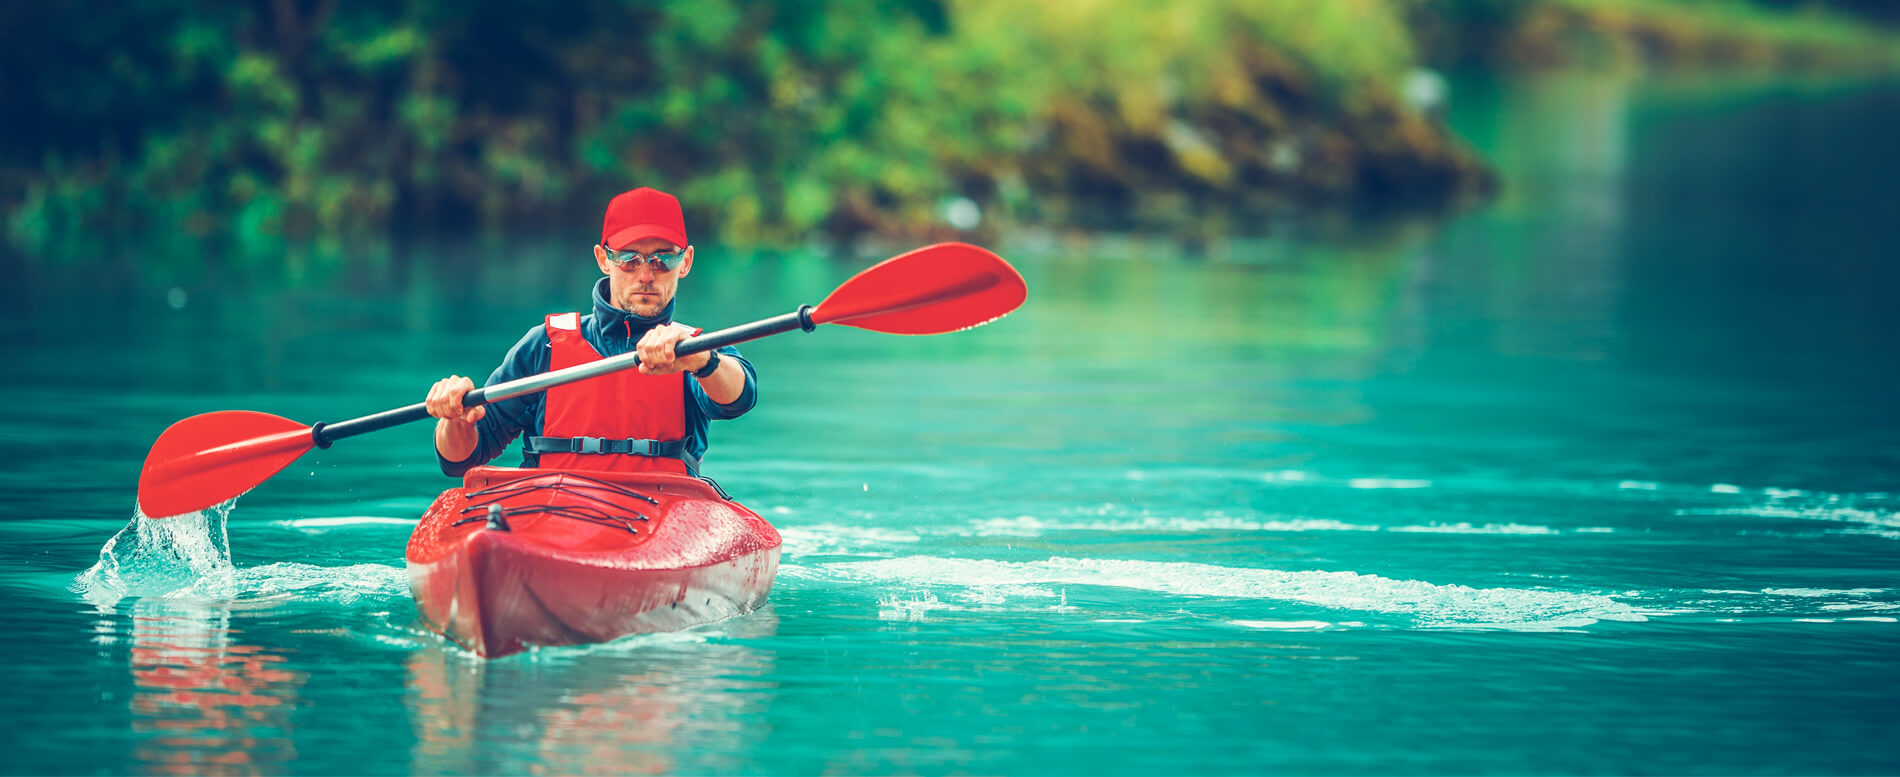 Man kayaking with a red kayak and a red kayak blade